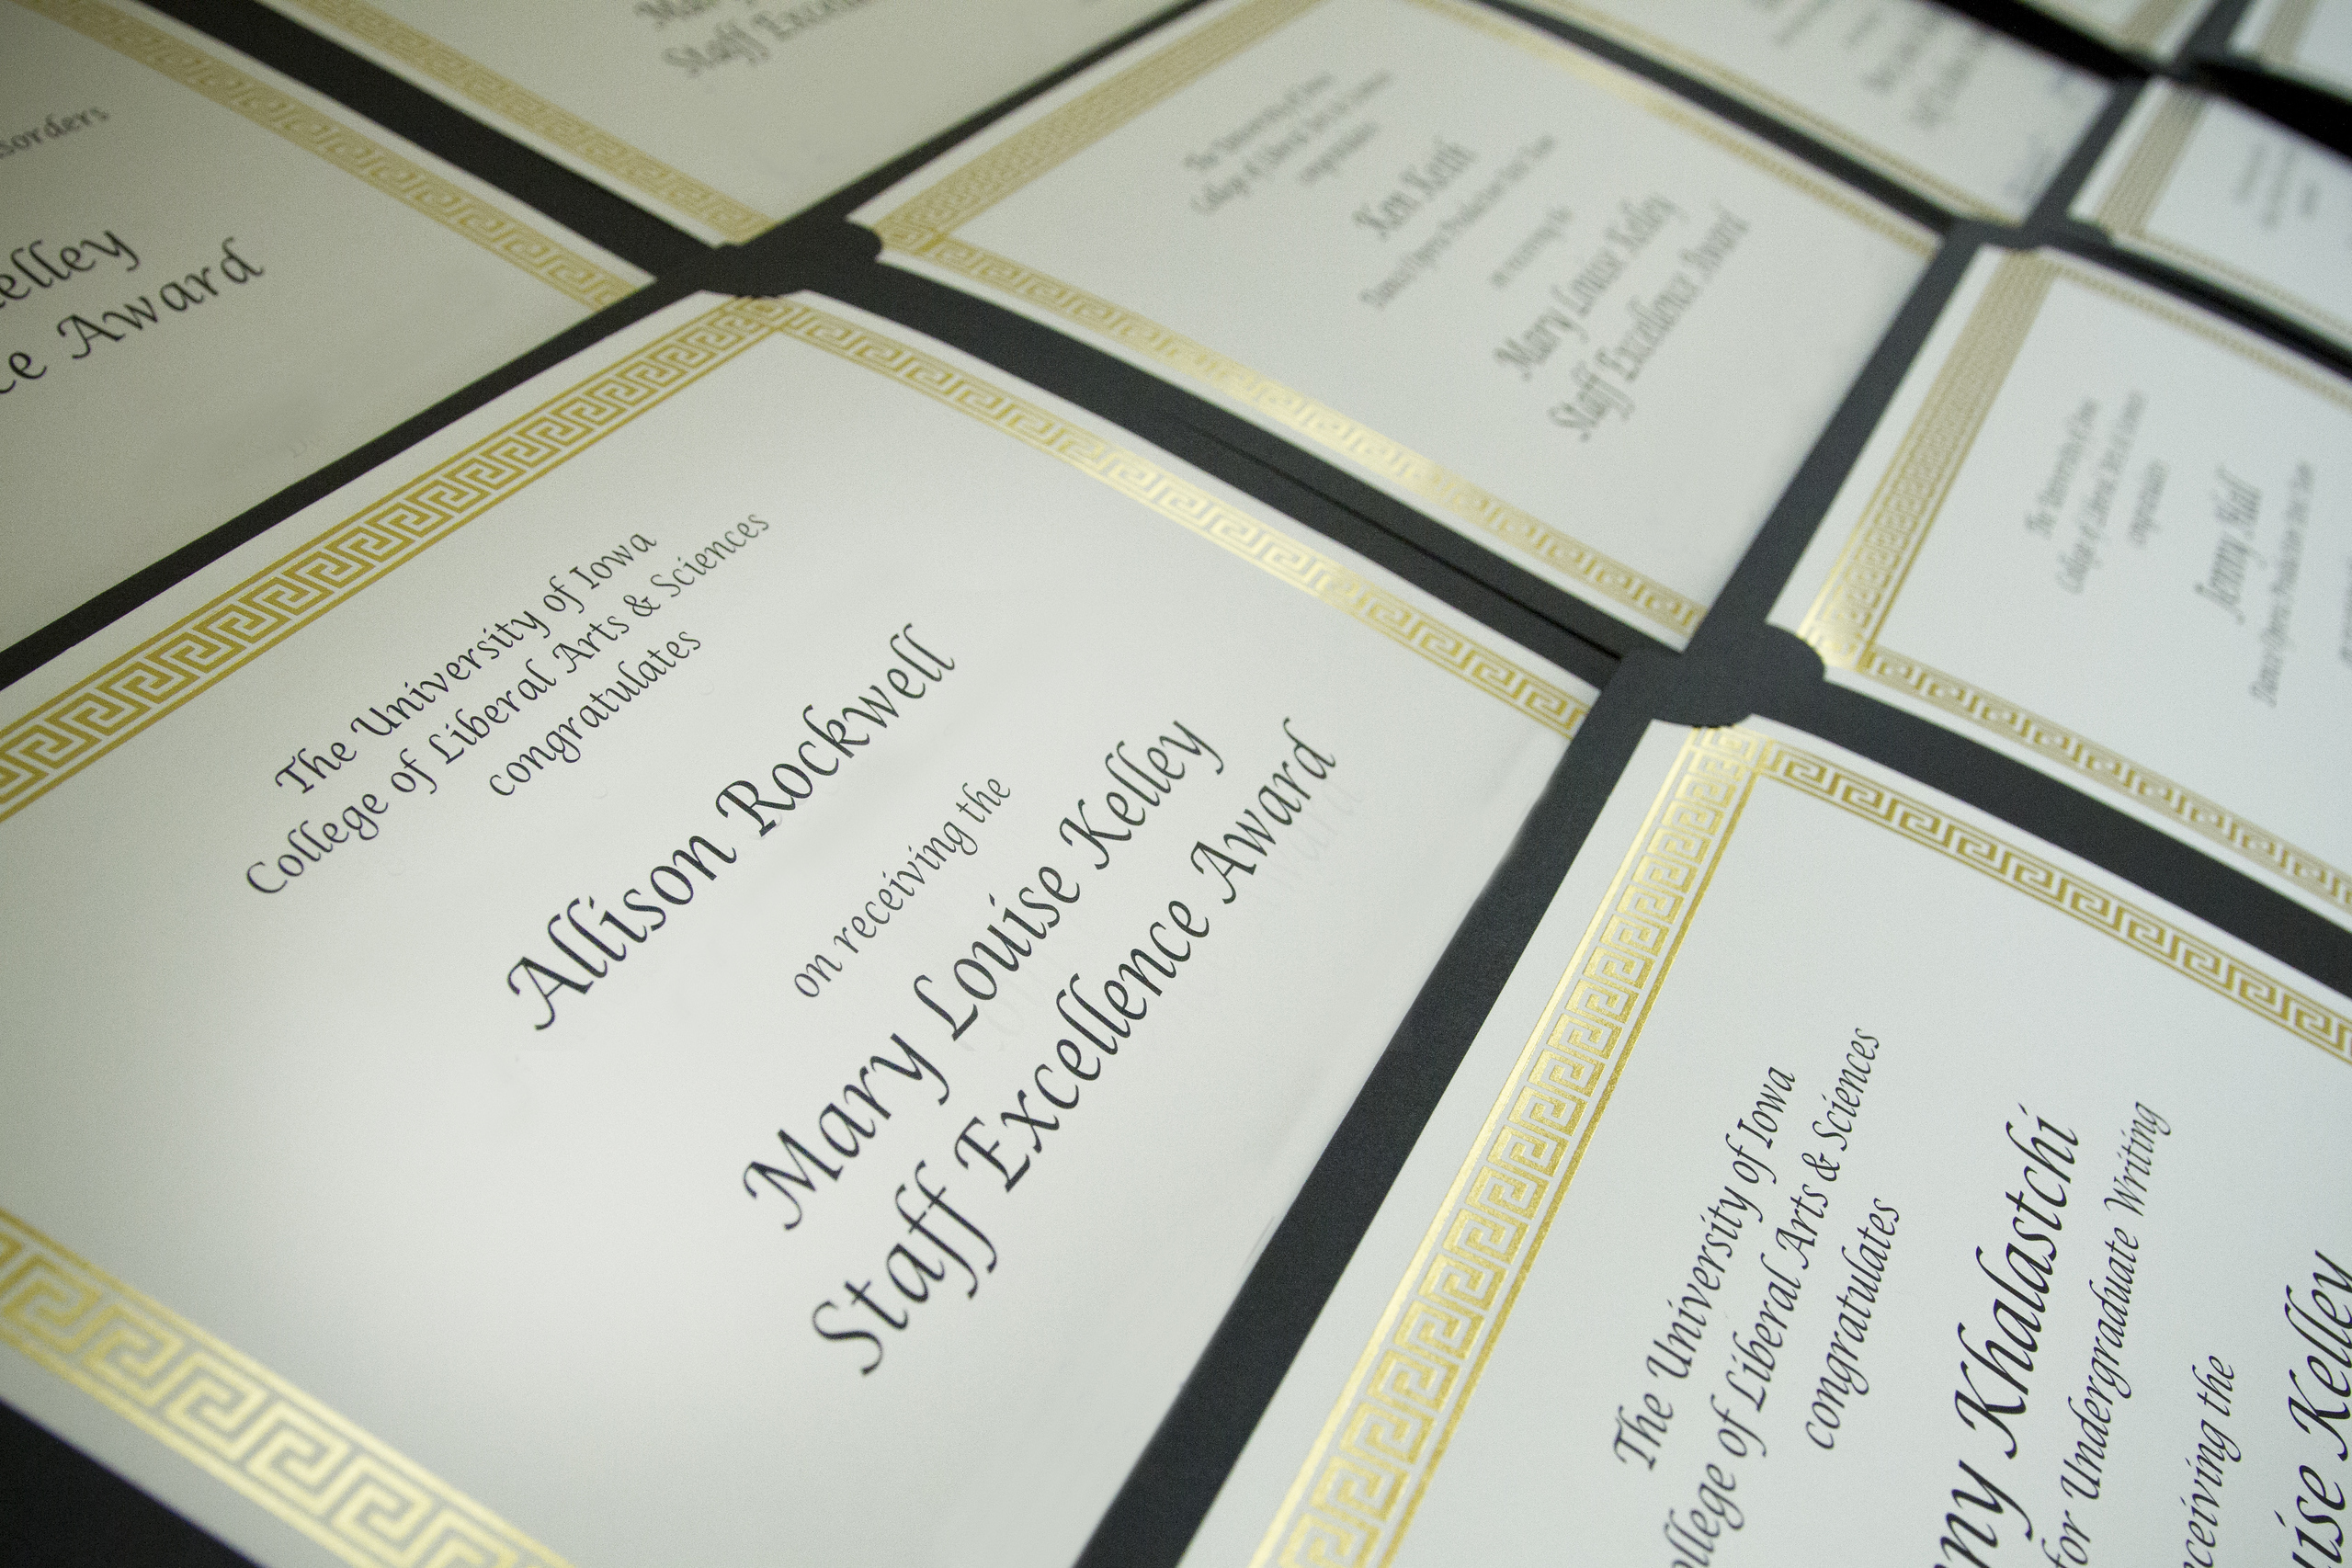 An image of CLAS staff award certificates